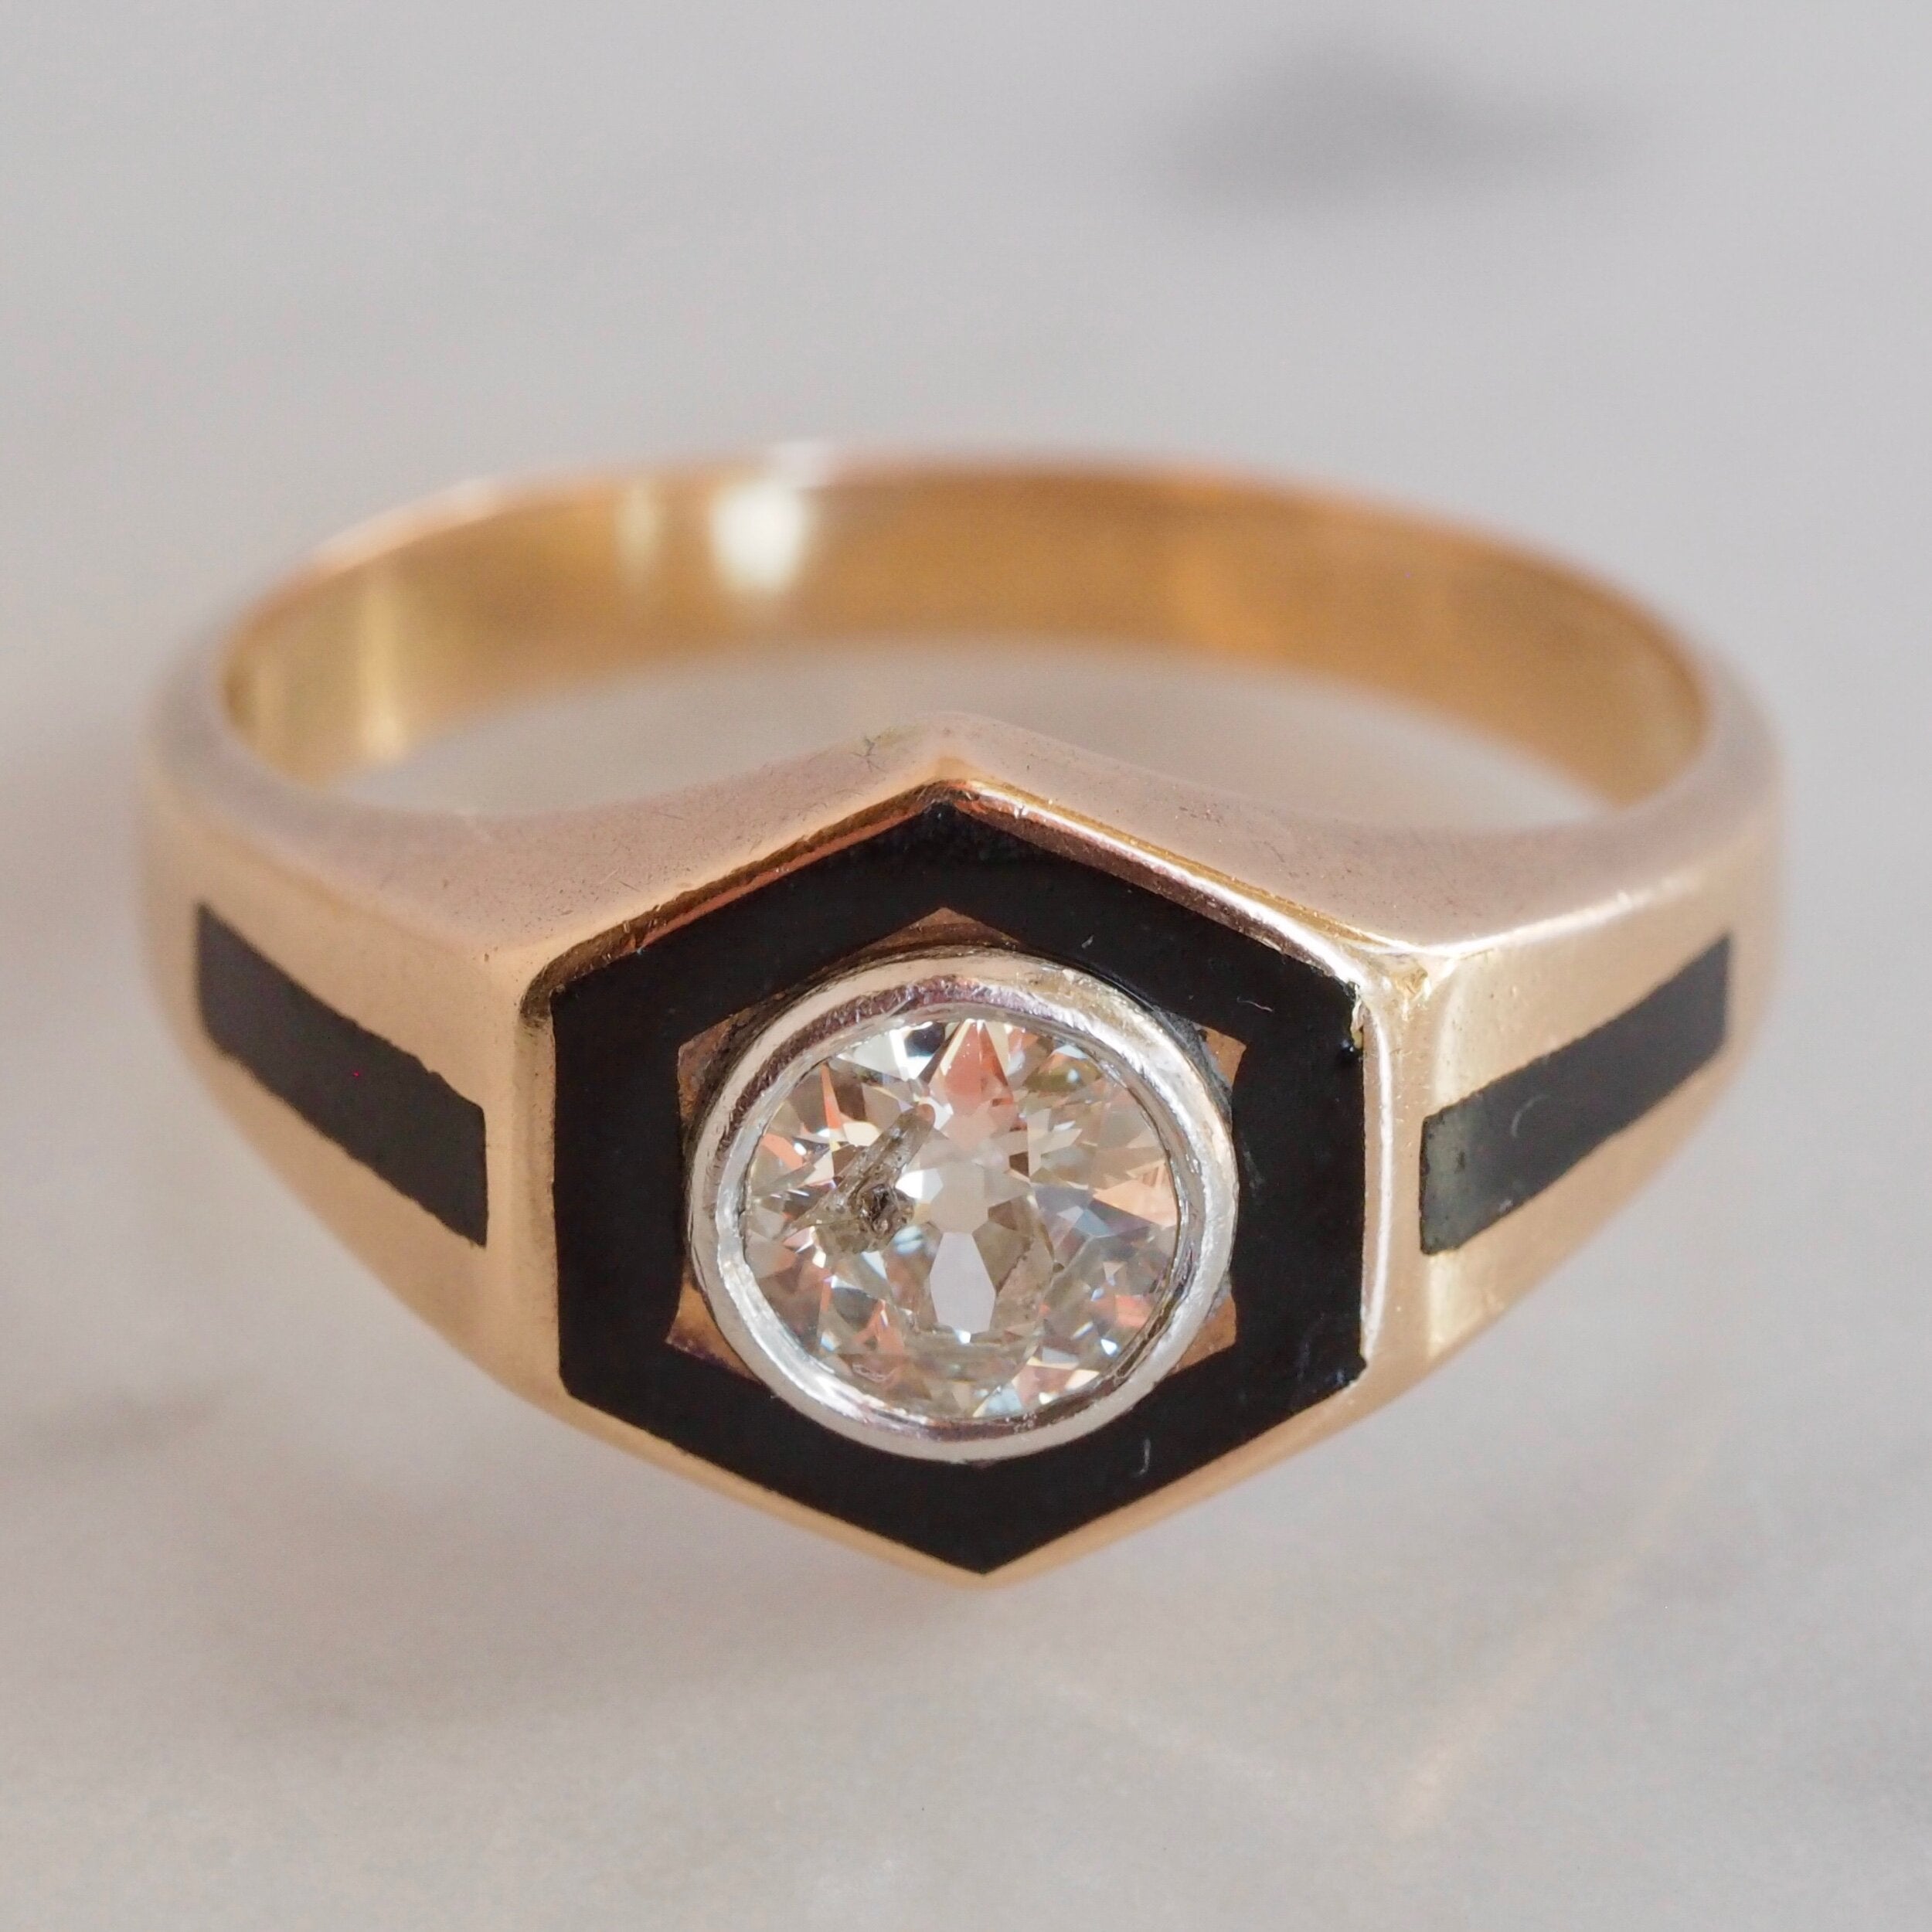 Art Deco 14k Gold and Enamel Old European Cut Diamond Ring with Enamel